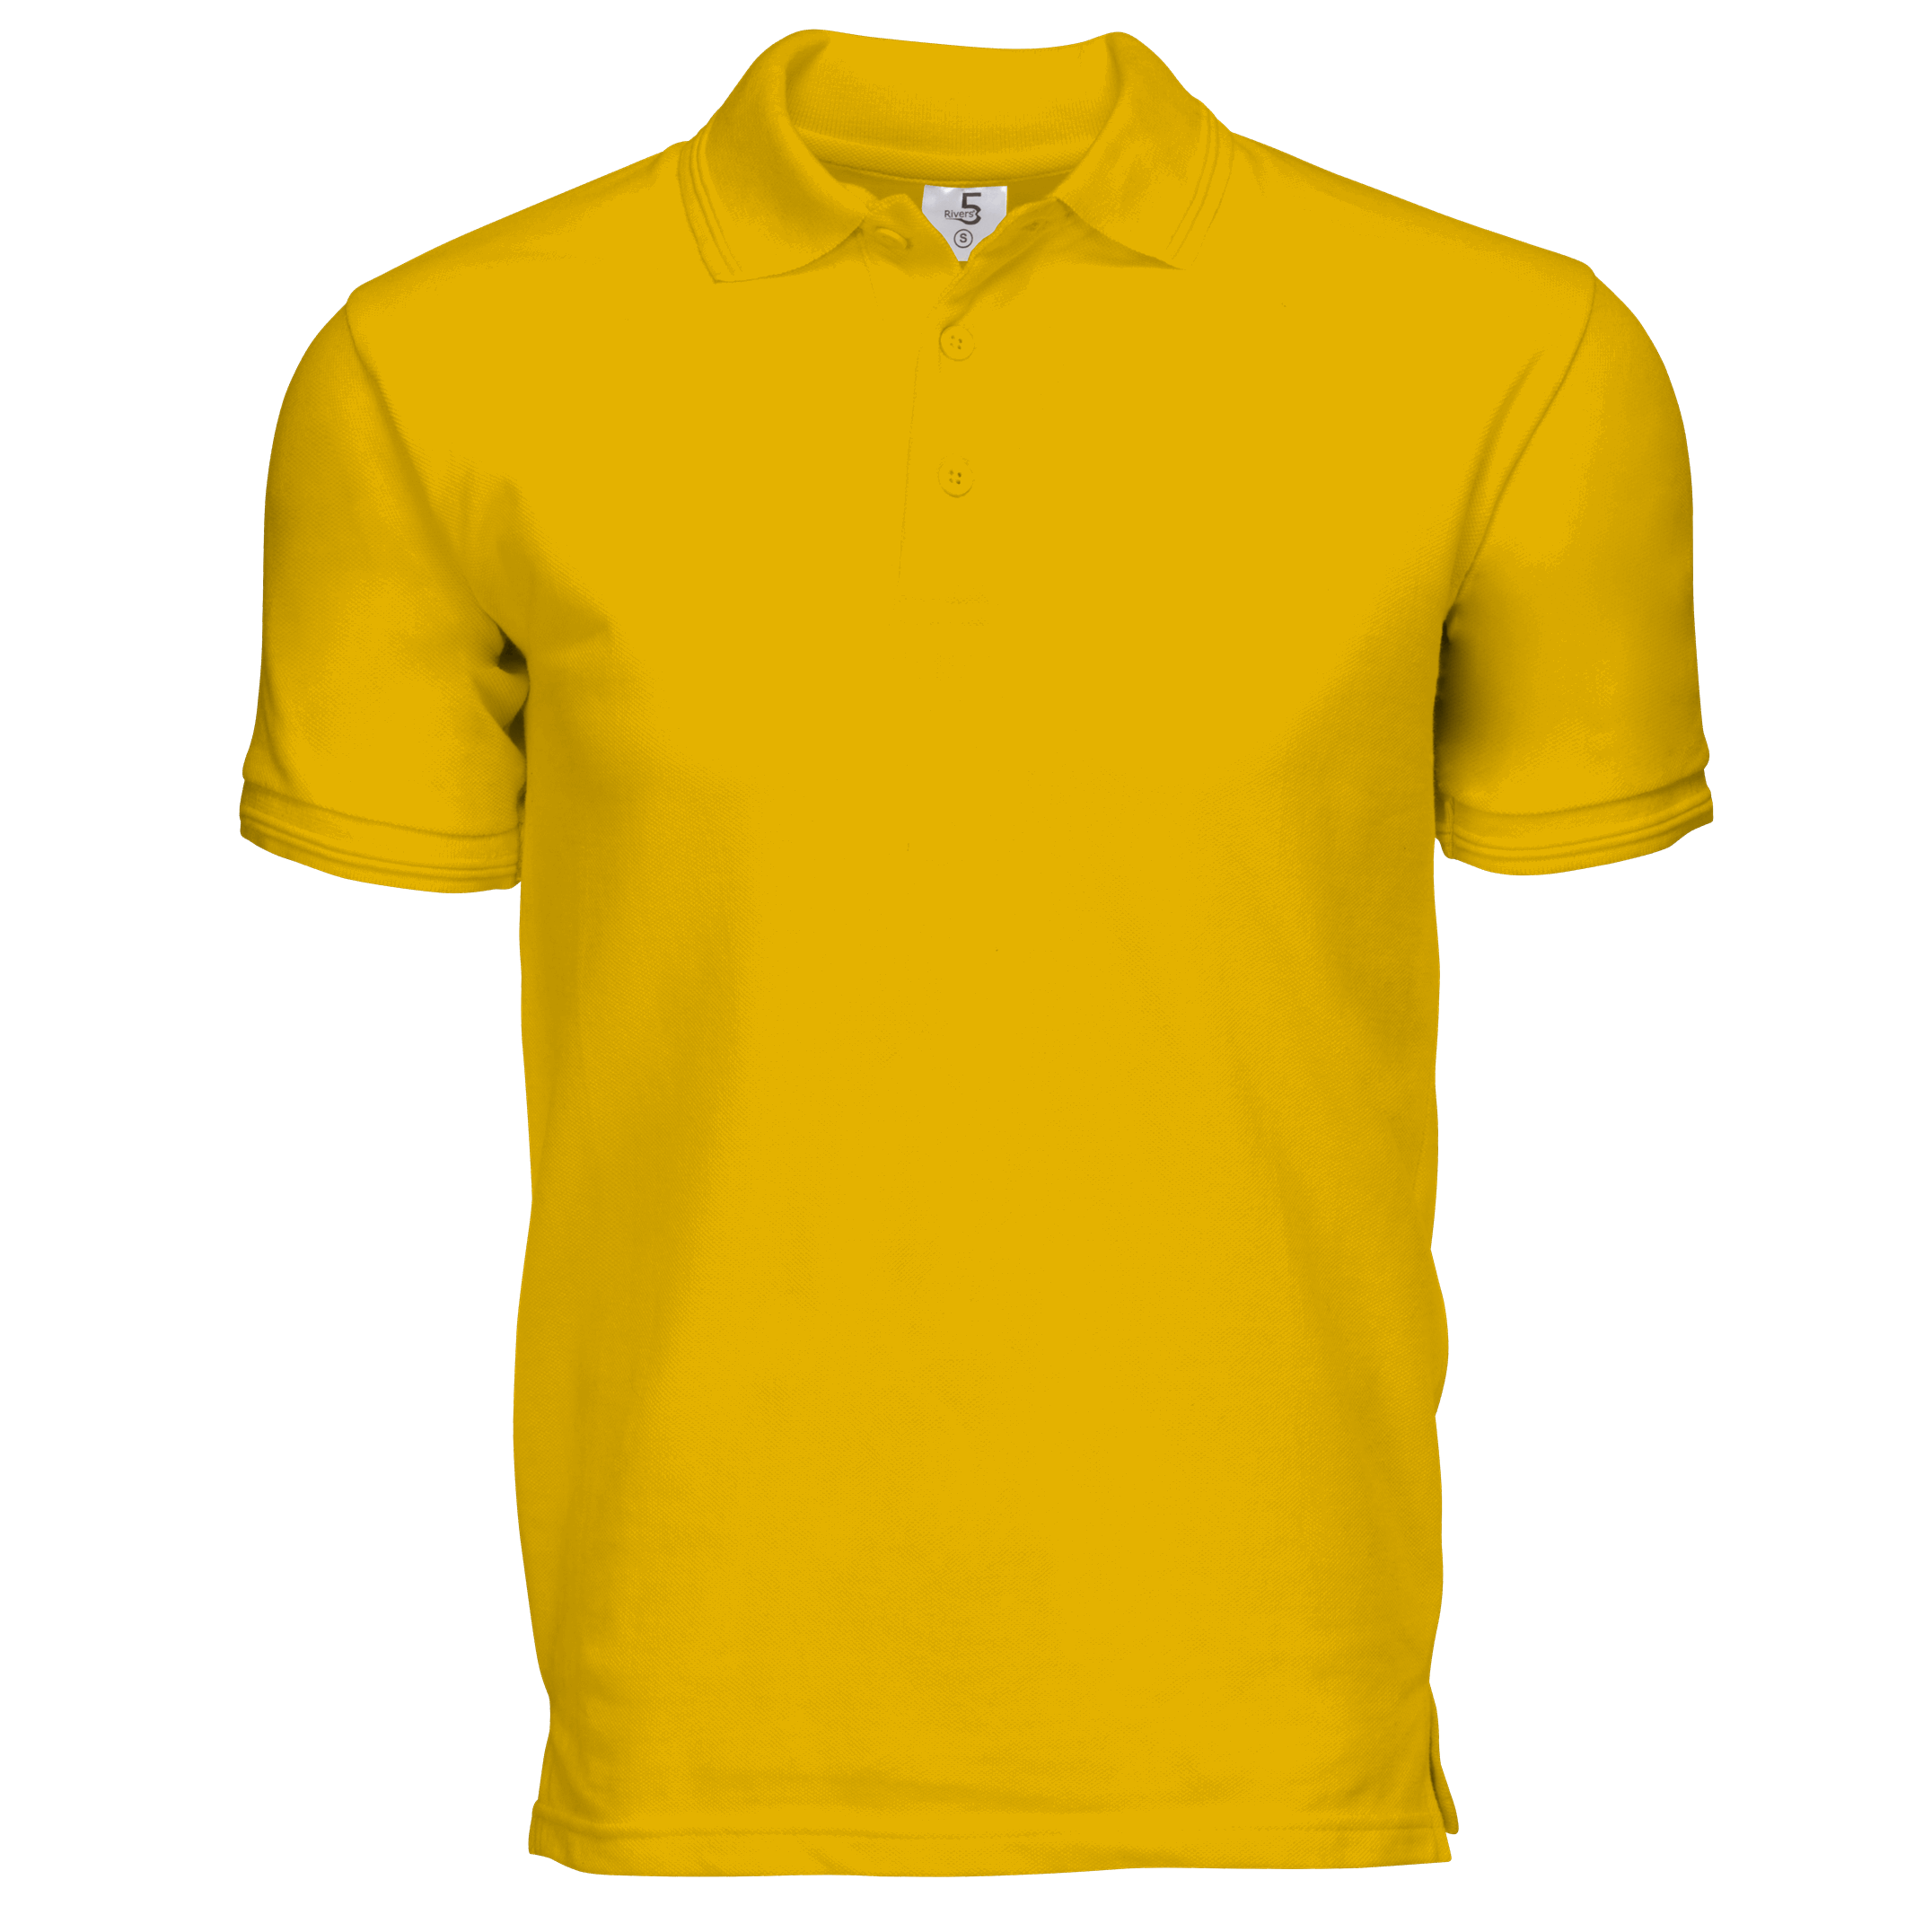 sardine yellow t-shirt garments transparent #17666